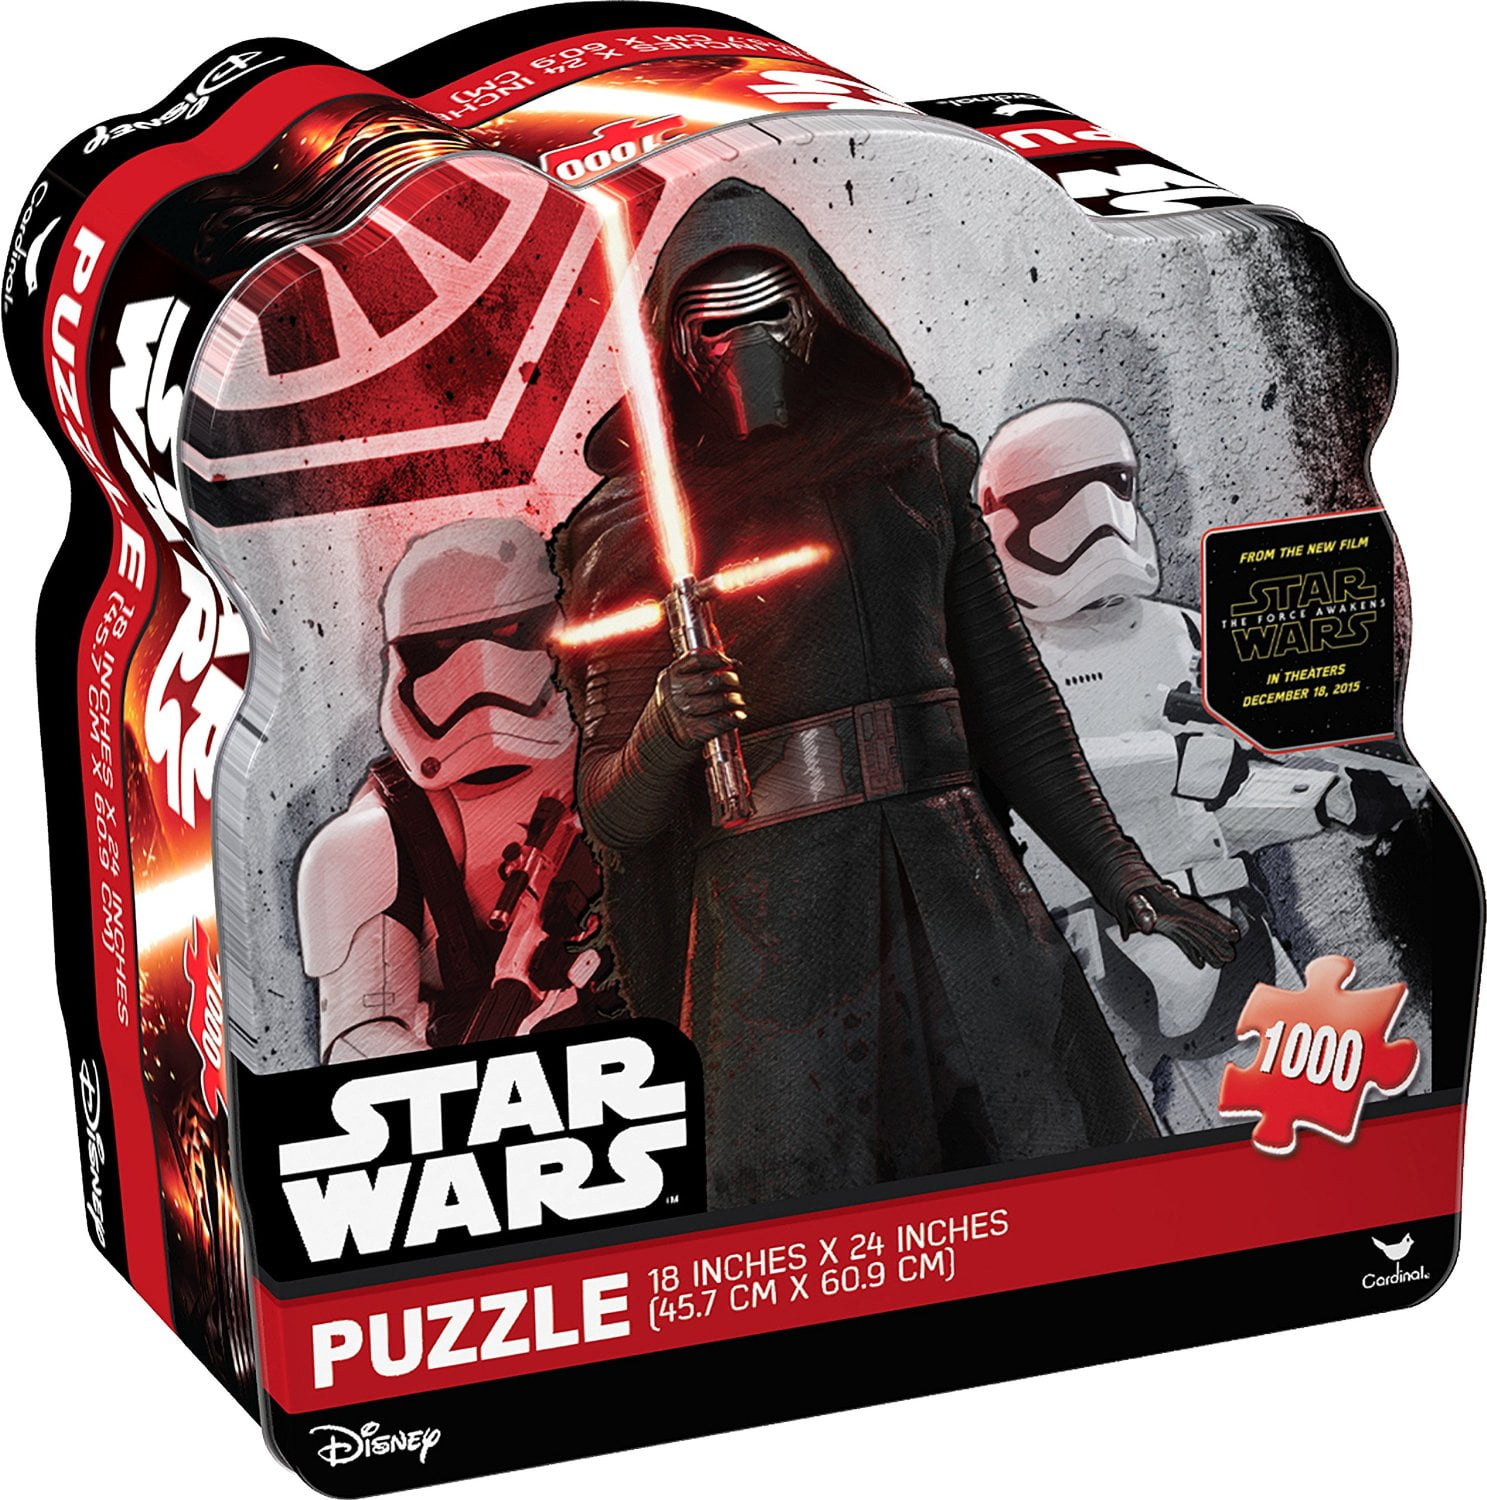 Star Wars: Darth Vader - Wooden Shaped Puzzle – Oaken Vault